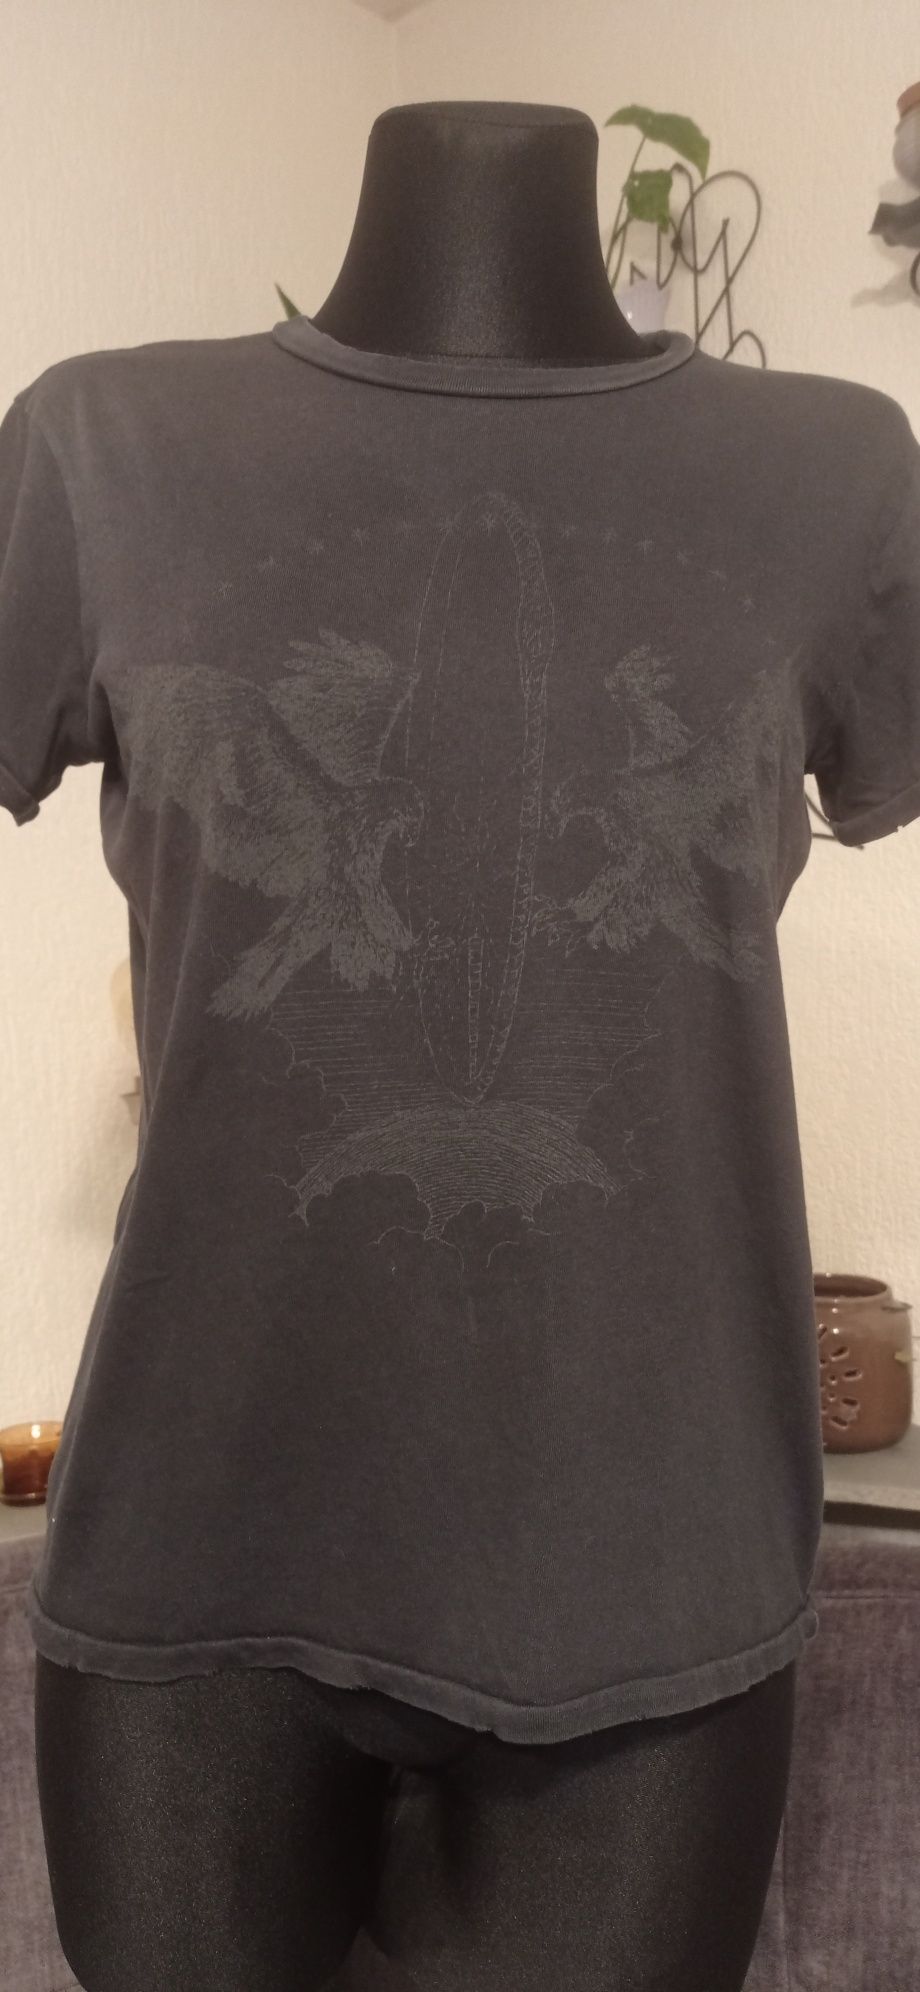 Current elliott-damski tshirt. s/m
Made in USA
Osiągnięto celowe spran